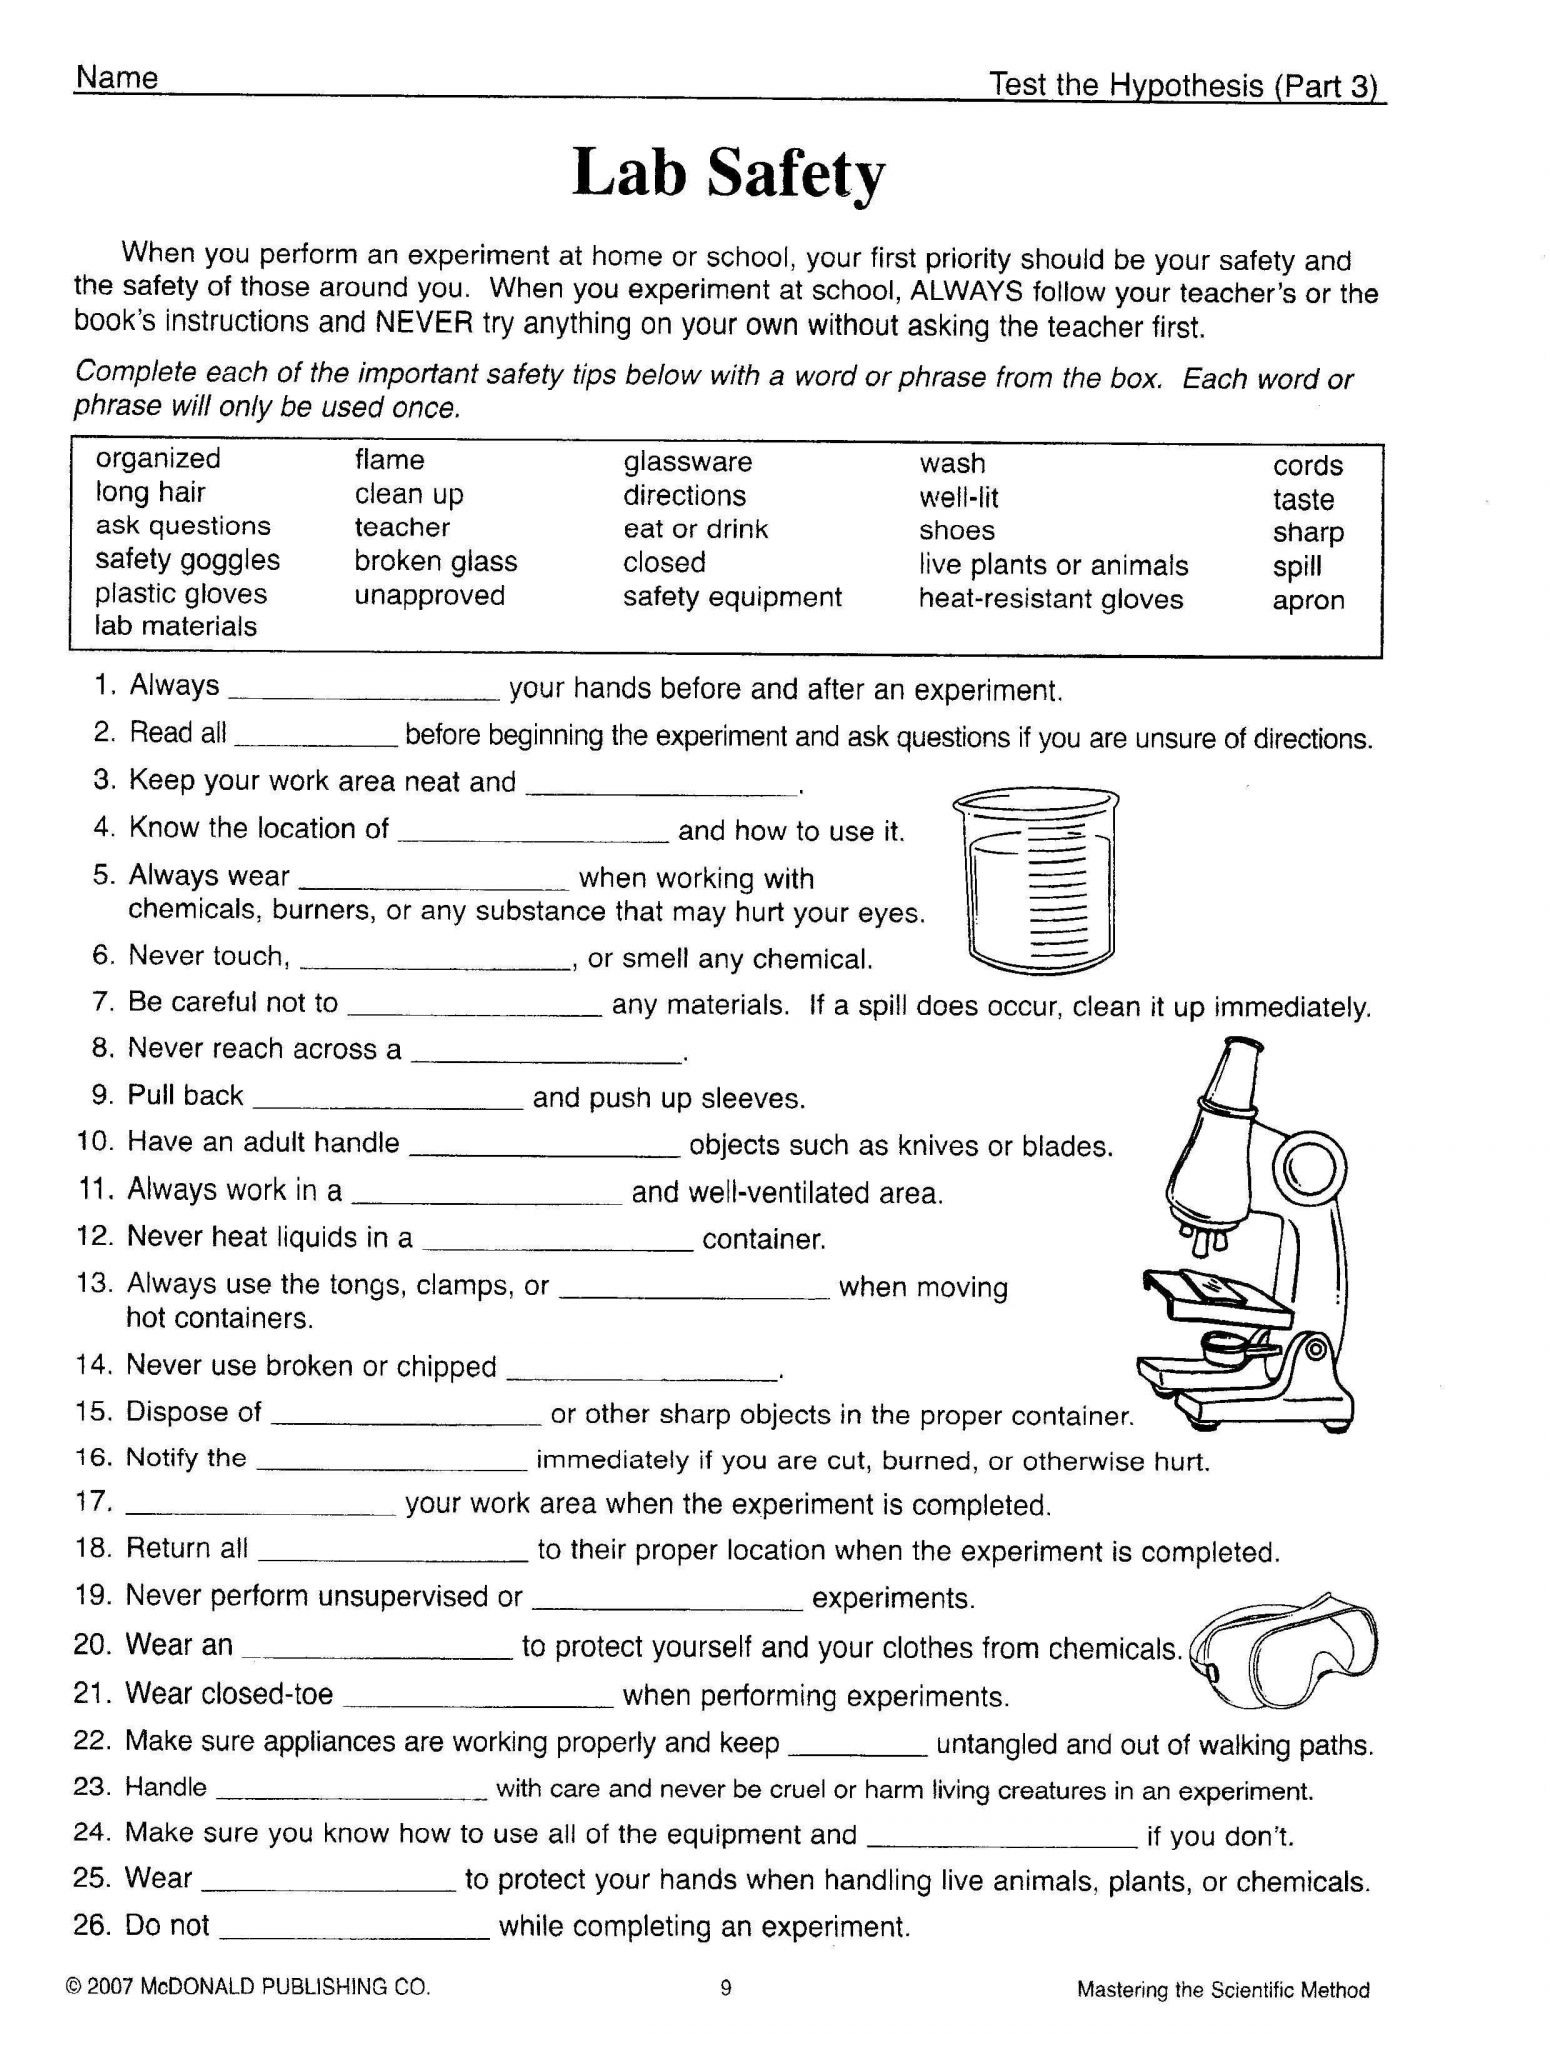 Experimental Design Worksheet Scientific Method and Free Middle School Science Worksheets 7rd Grade Free